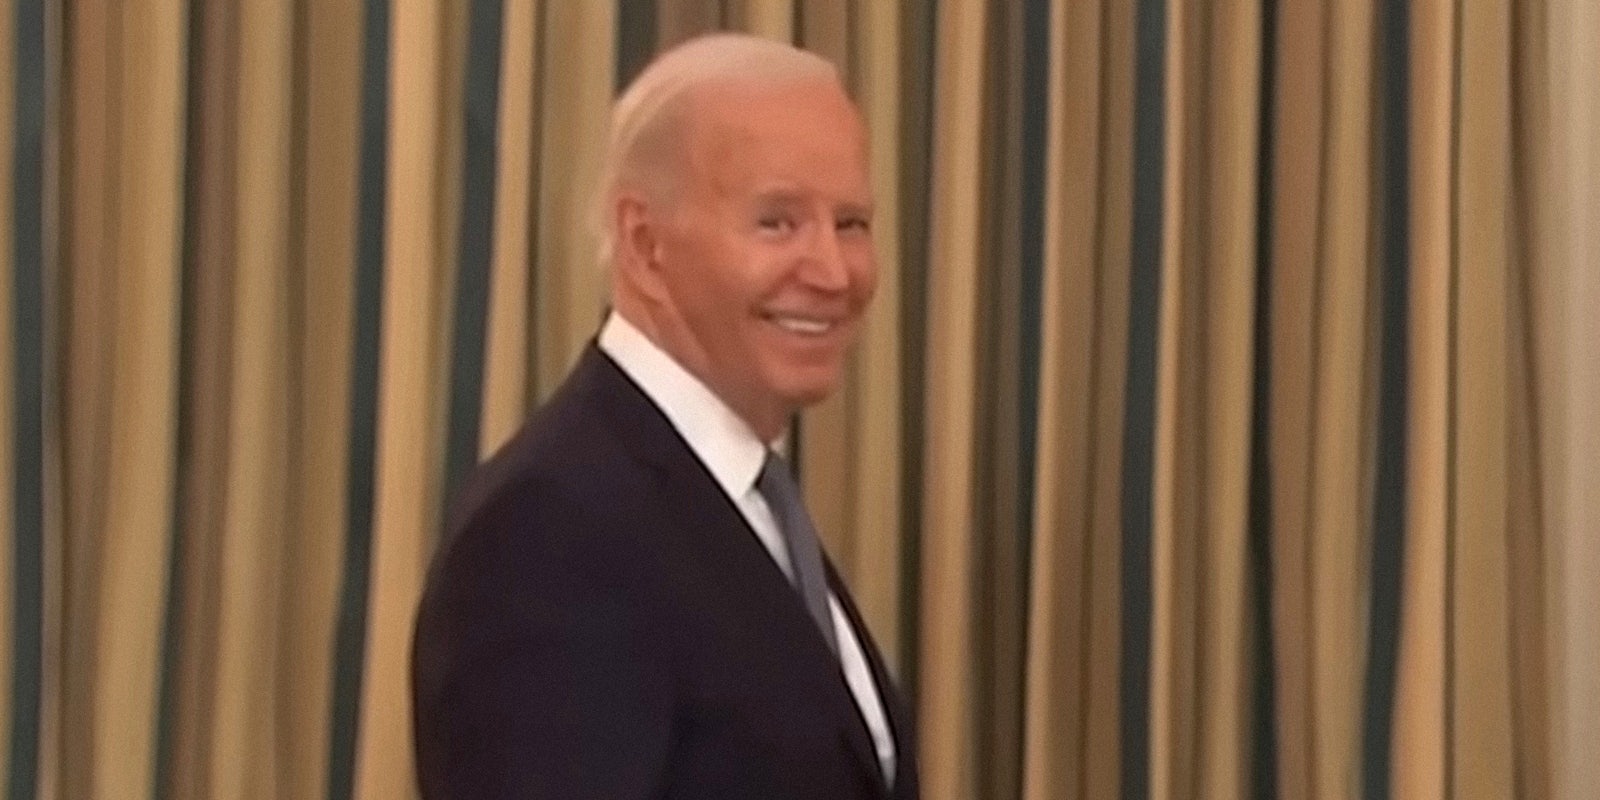 Joe Biden Grin Becomes Latest Toothy Political Meme